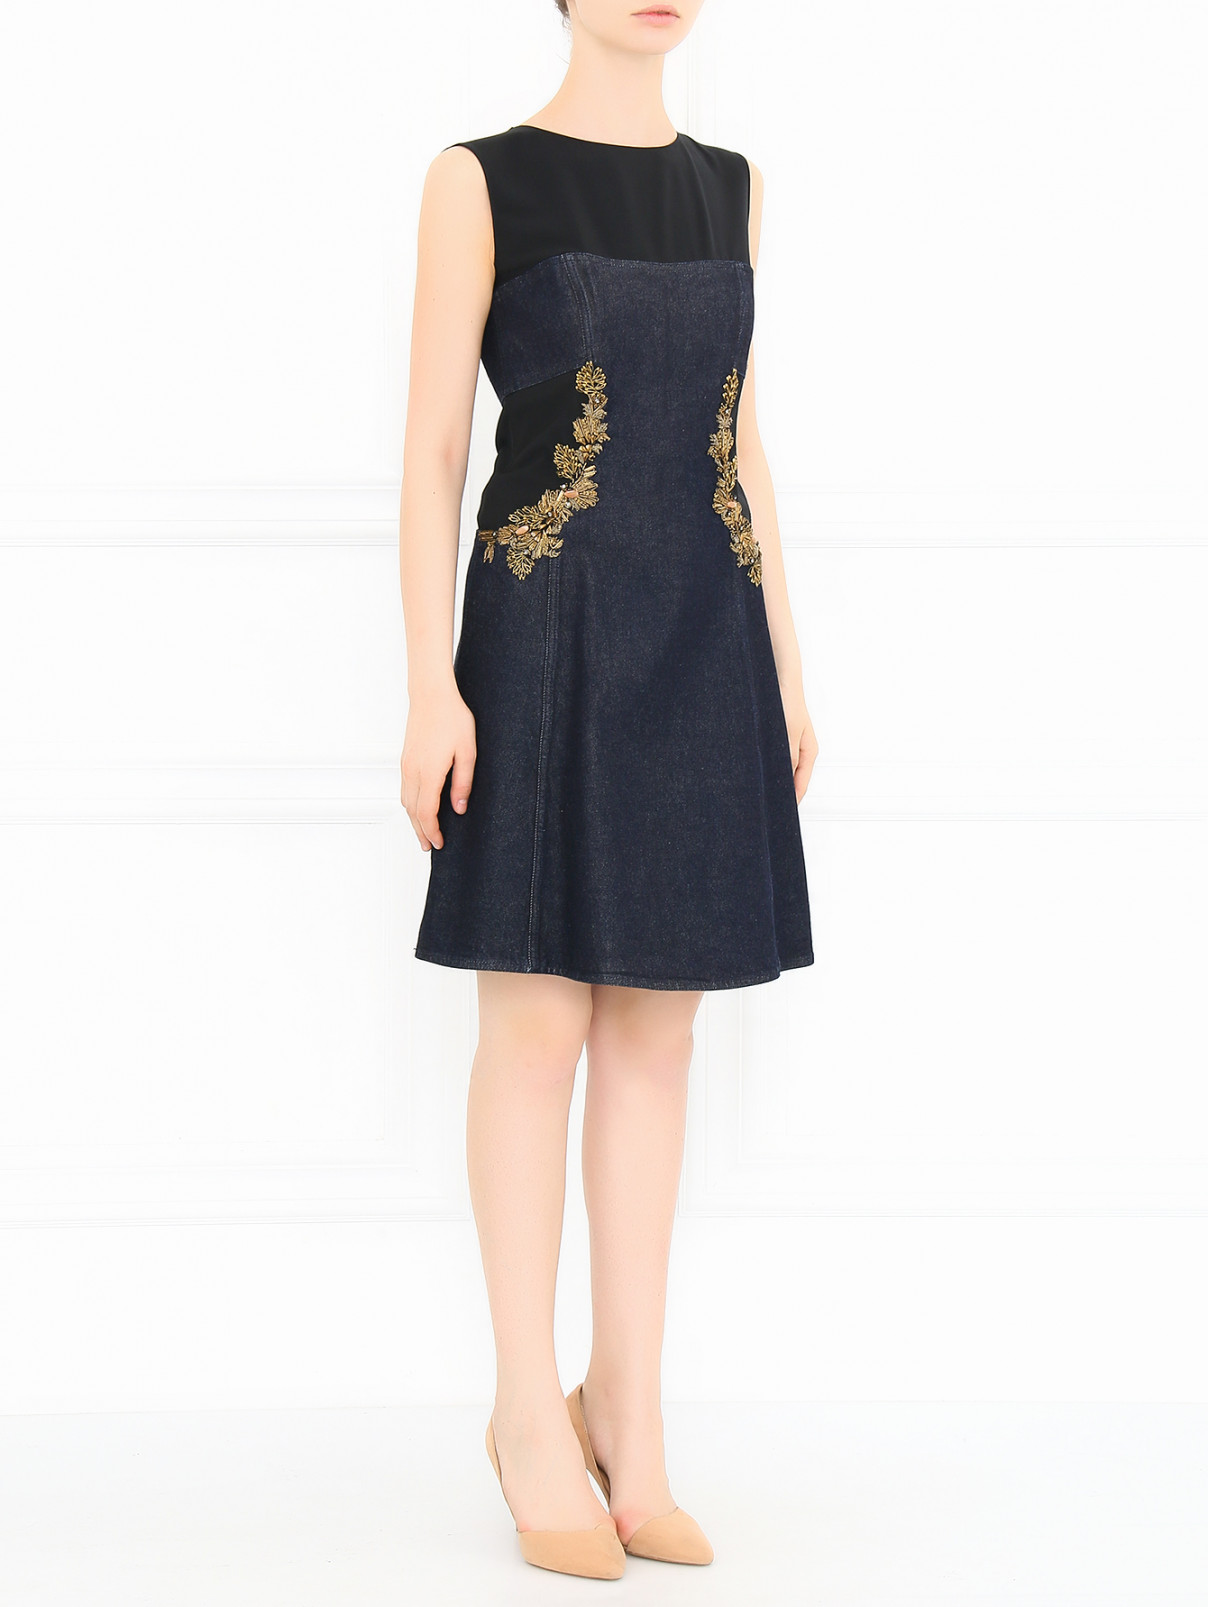 Платье-футляр из хлопка без рукавов Alberta Ferretti  –  Модель Общий вид  – Цвет:  Синий